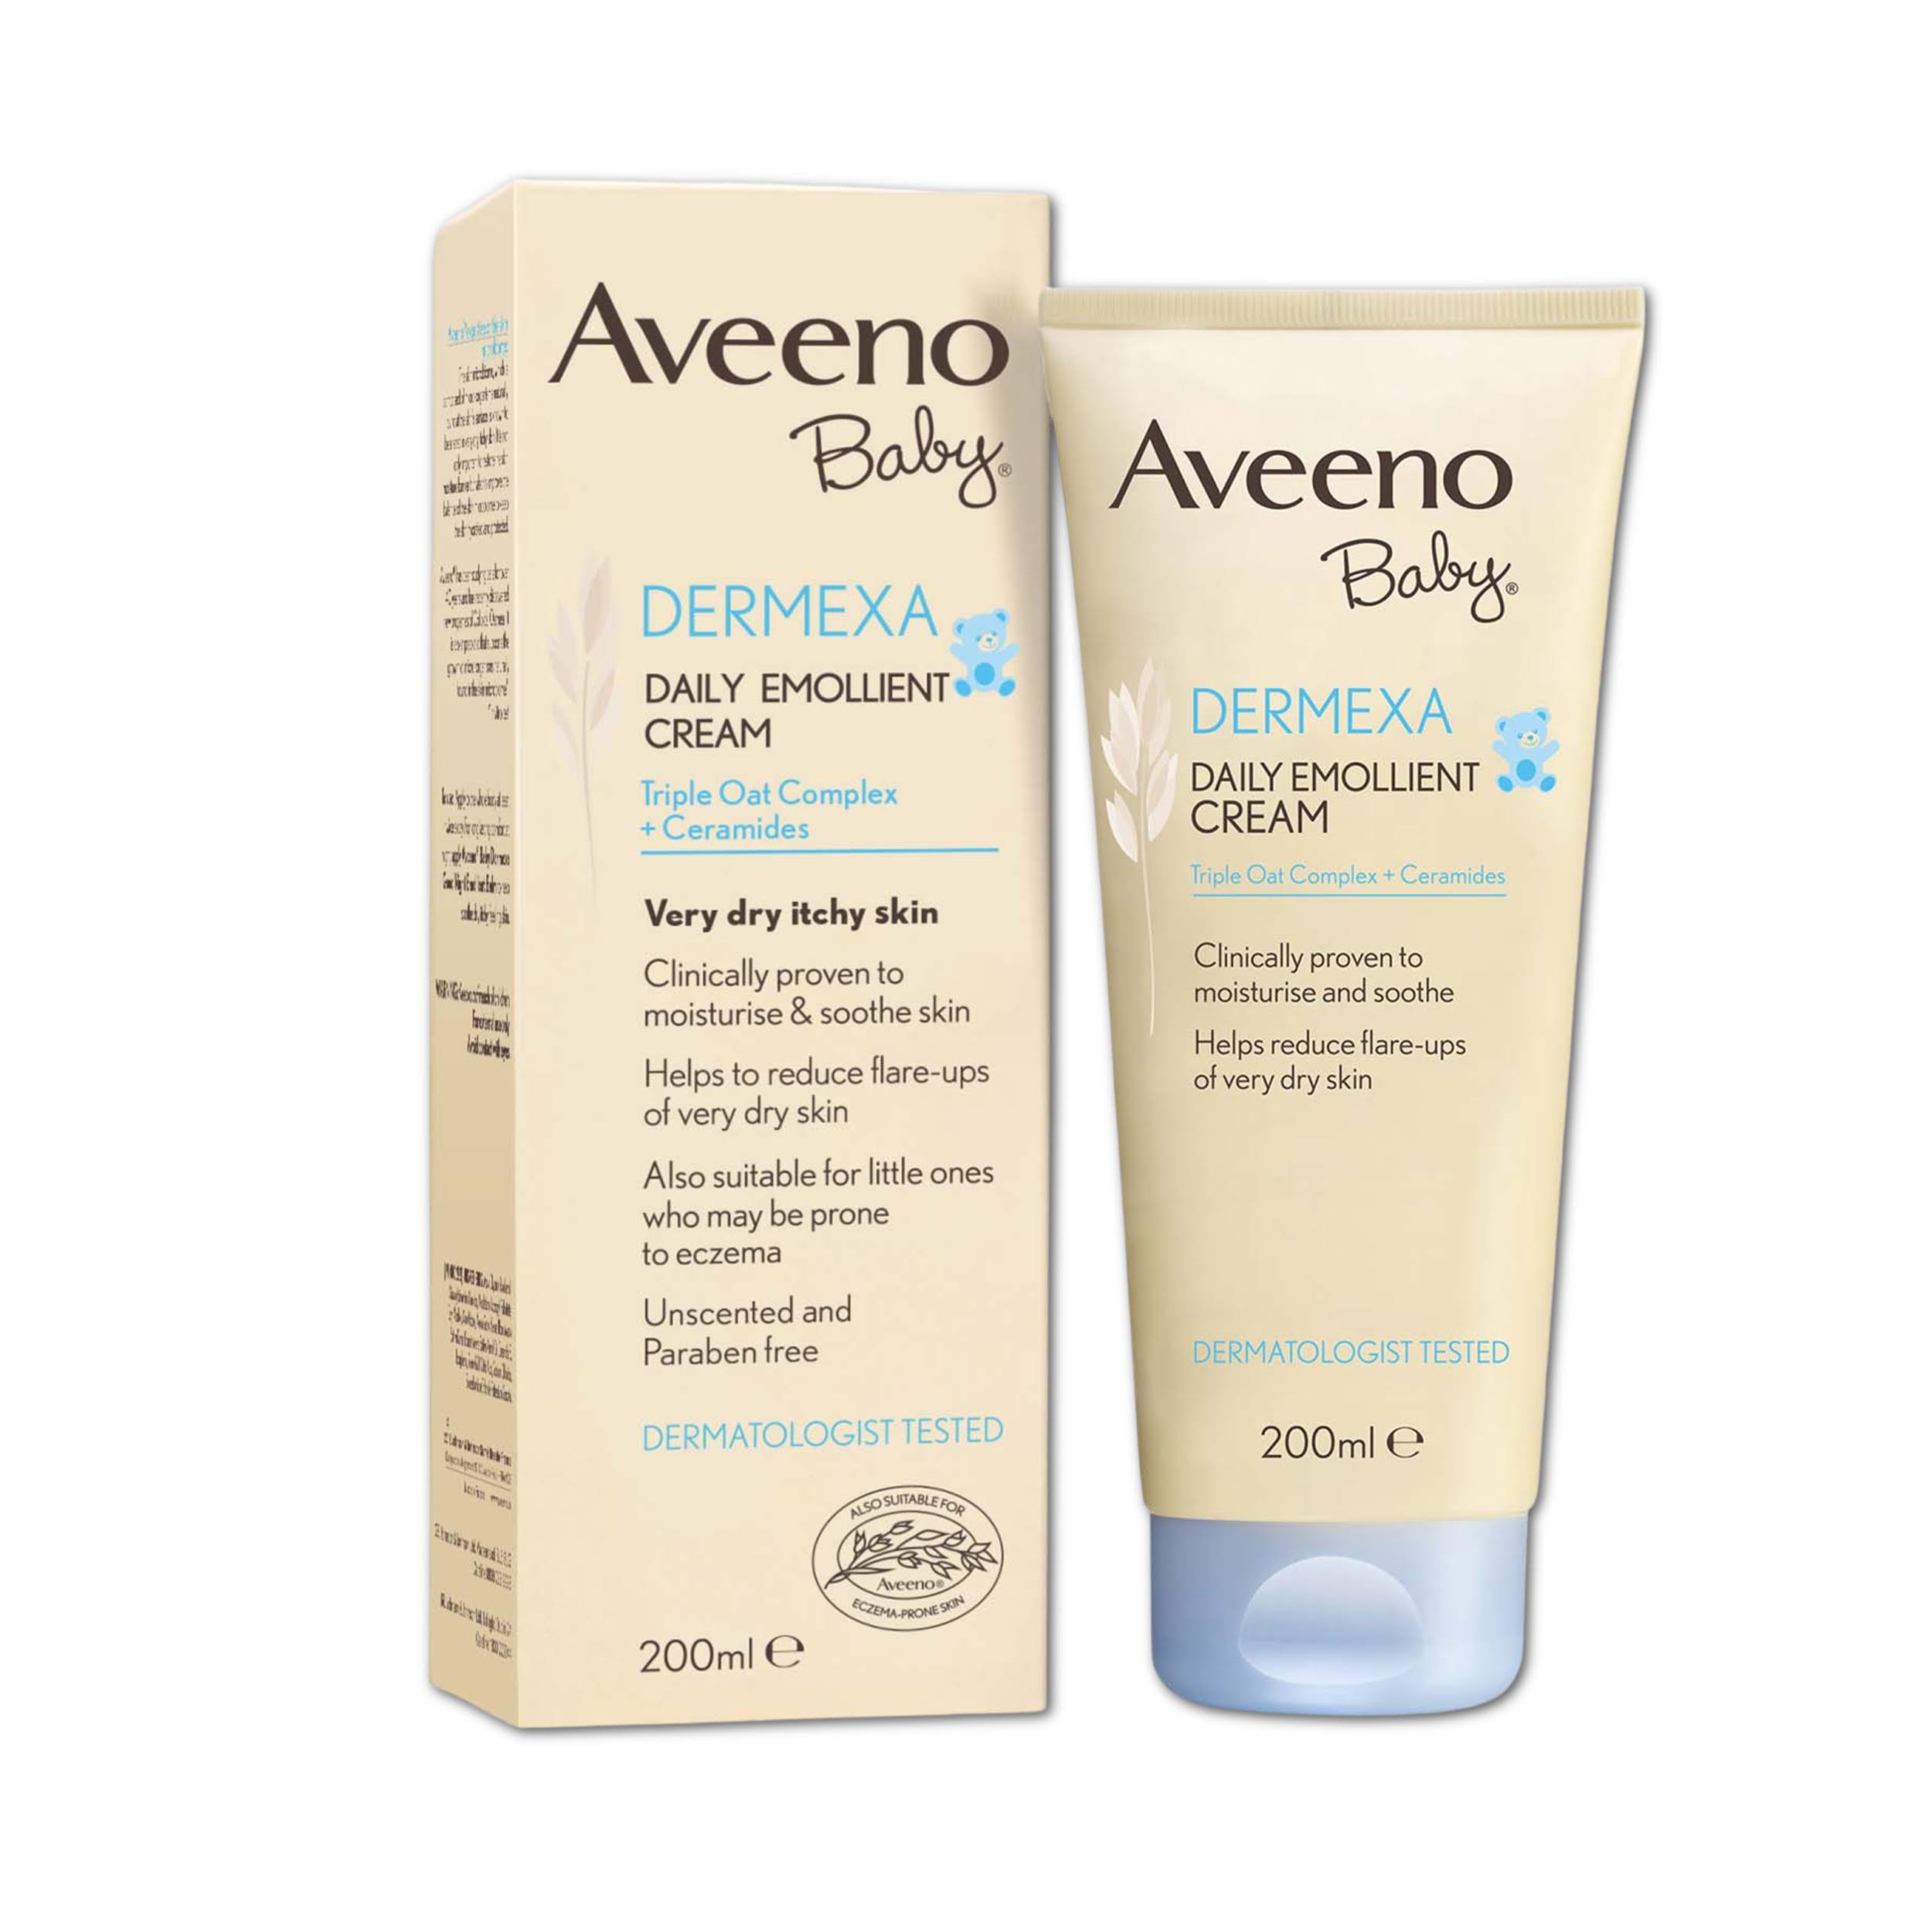 Aveeno Baby Dermexa Emollient Cream - 200ml